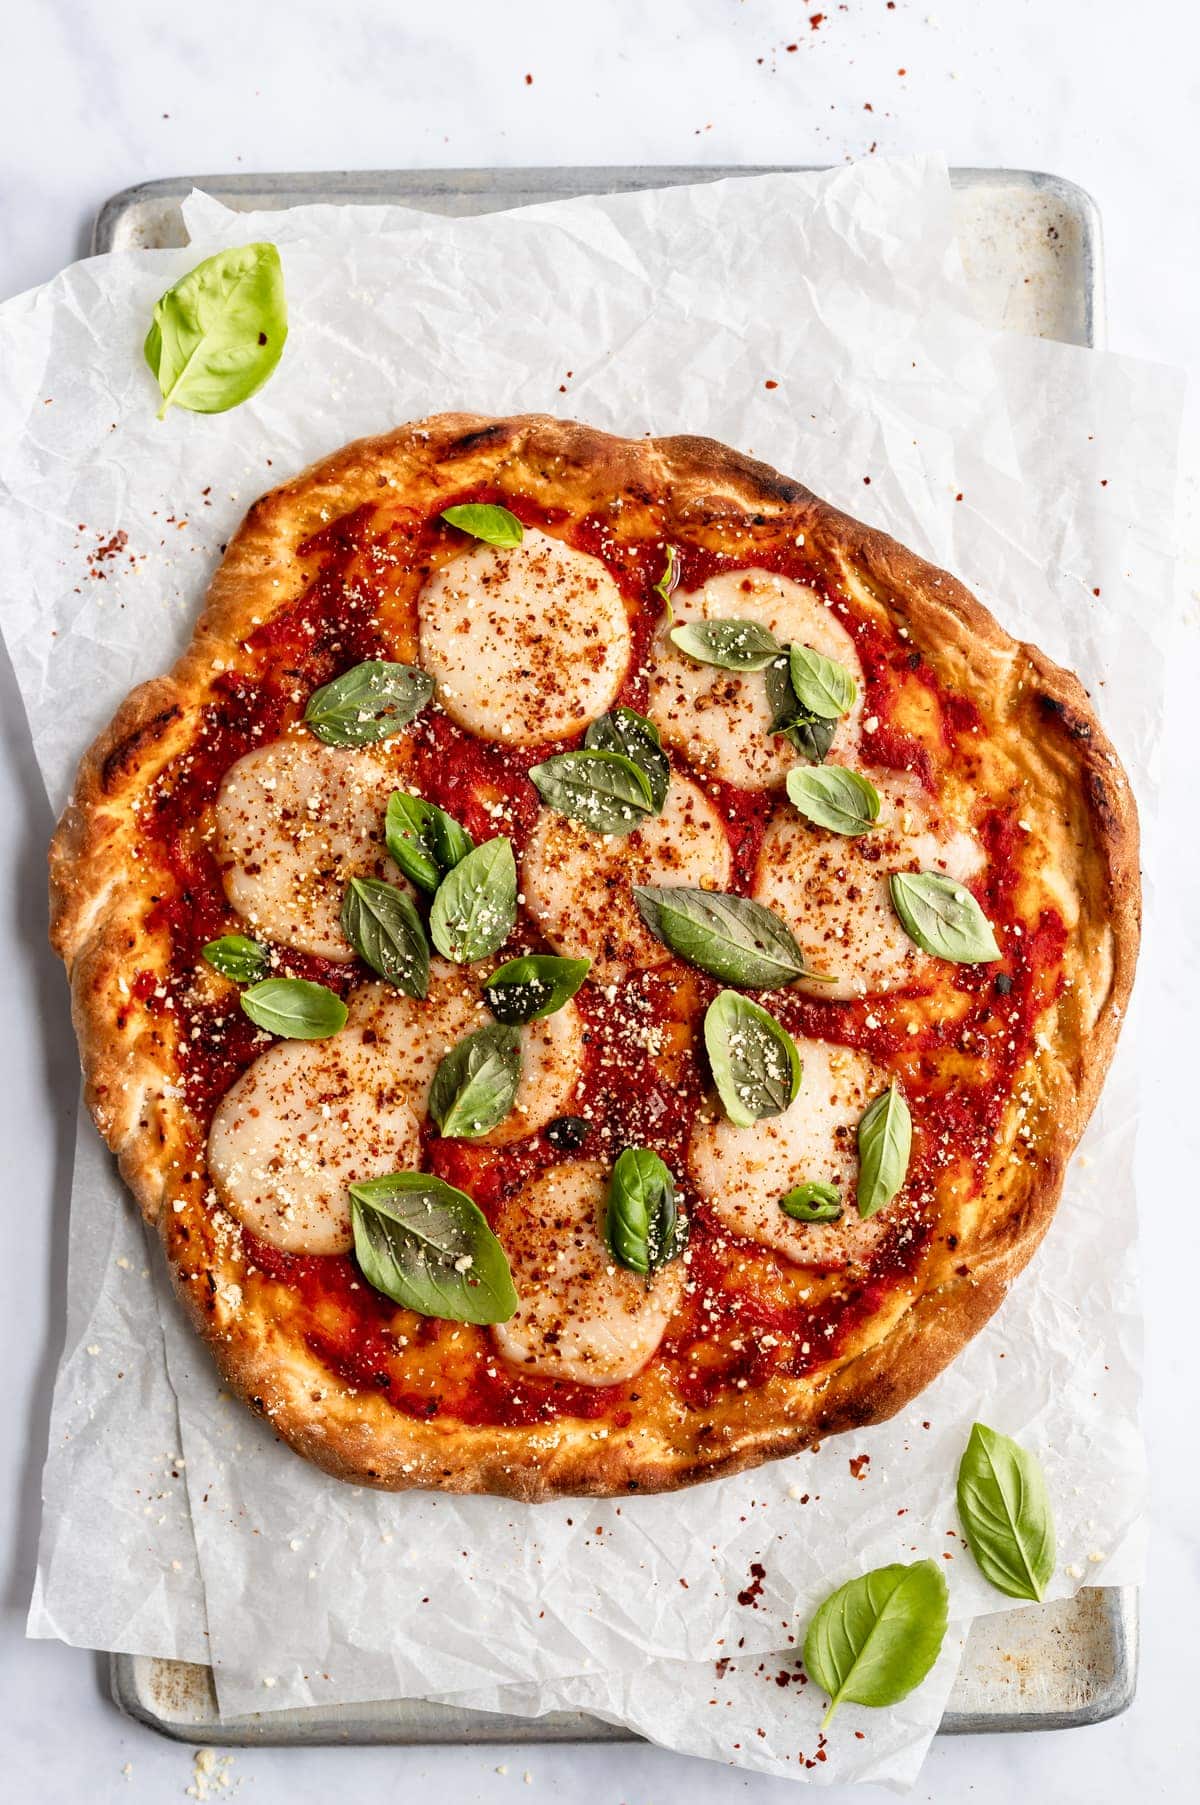 Photo of finished vegan pizza.